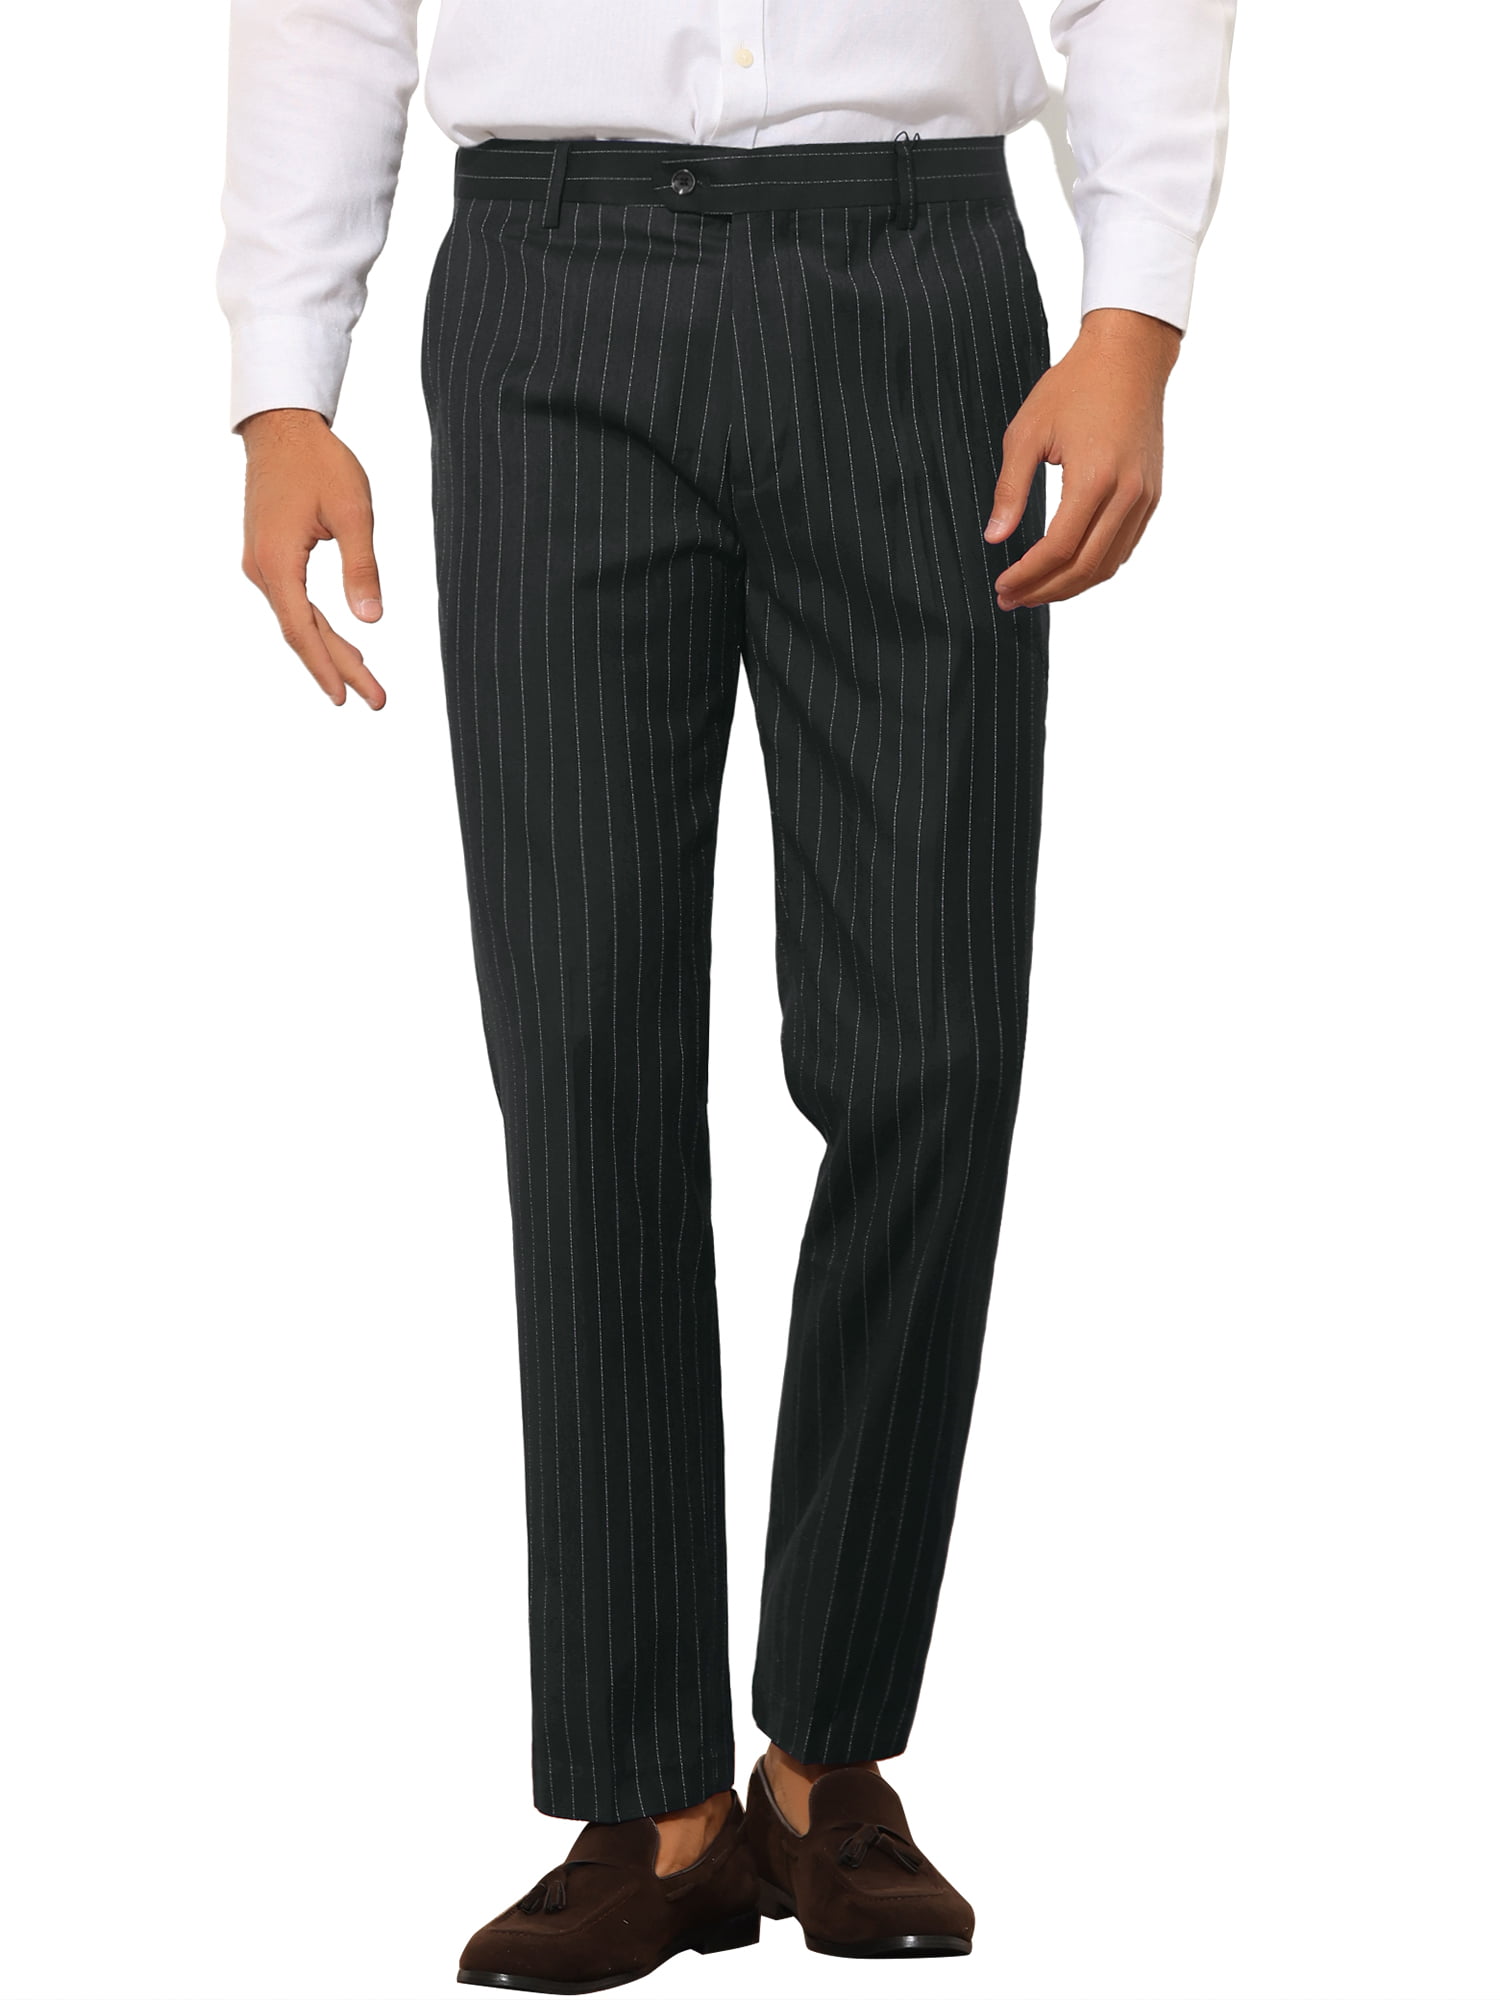 Jeans & Pants | Black Striped Formal Pants For Men | Freeup